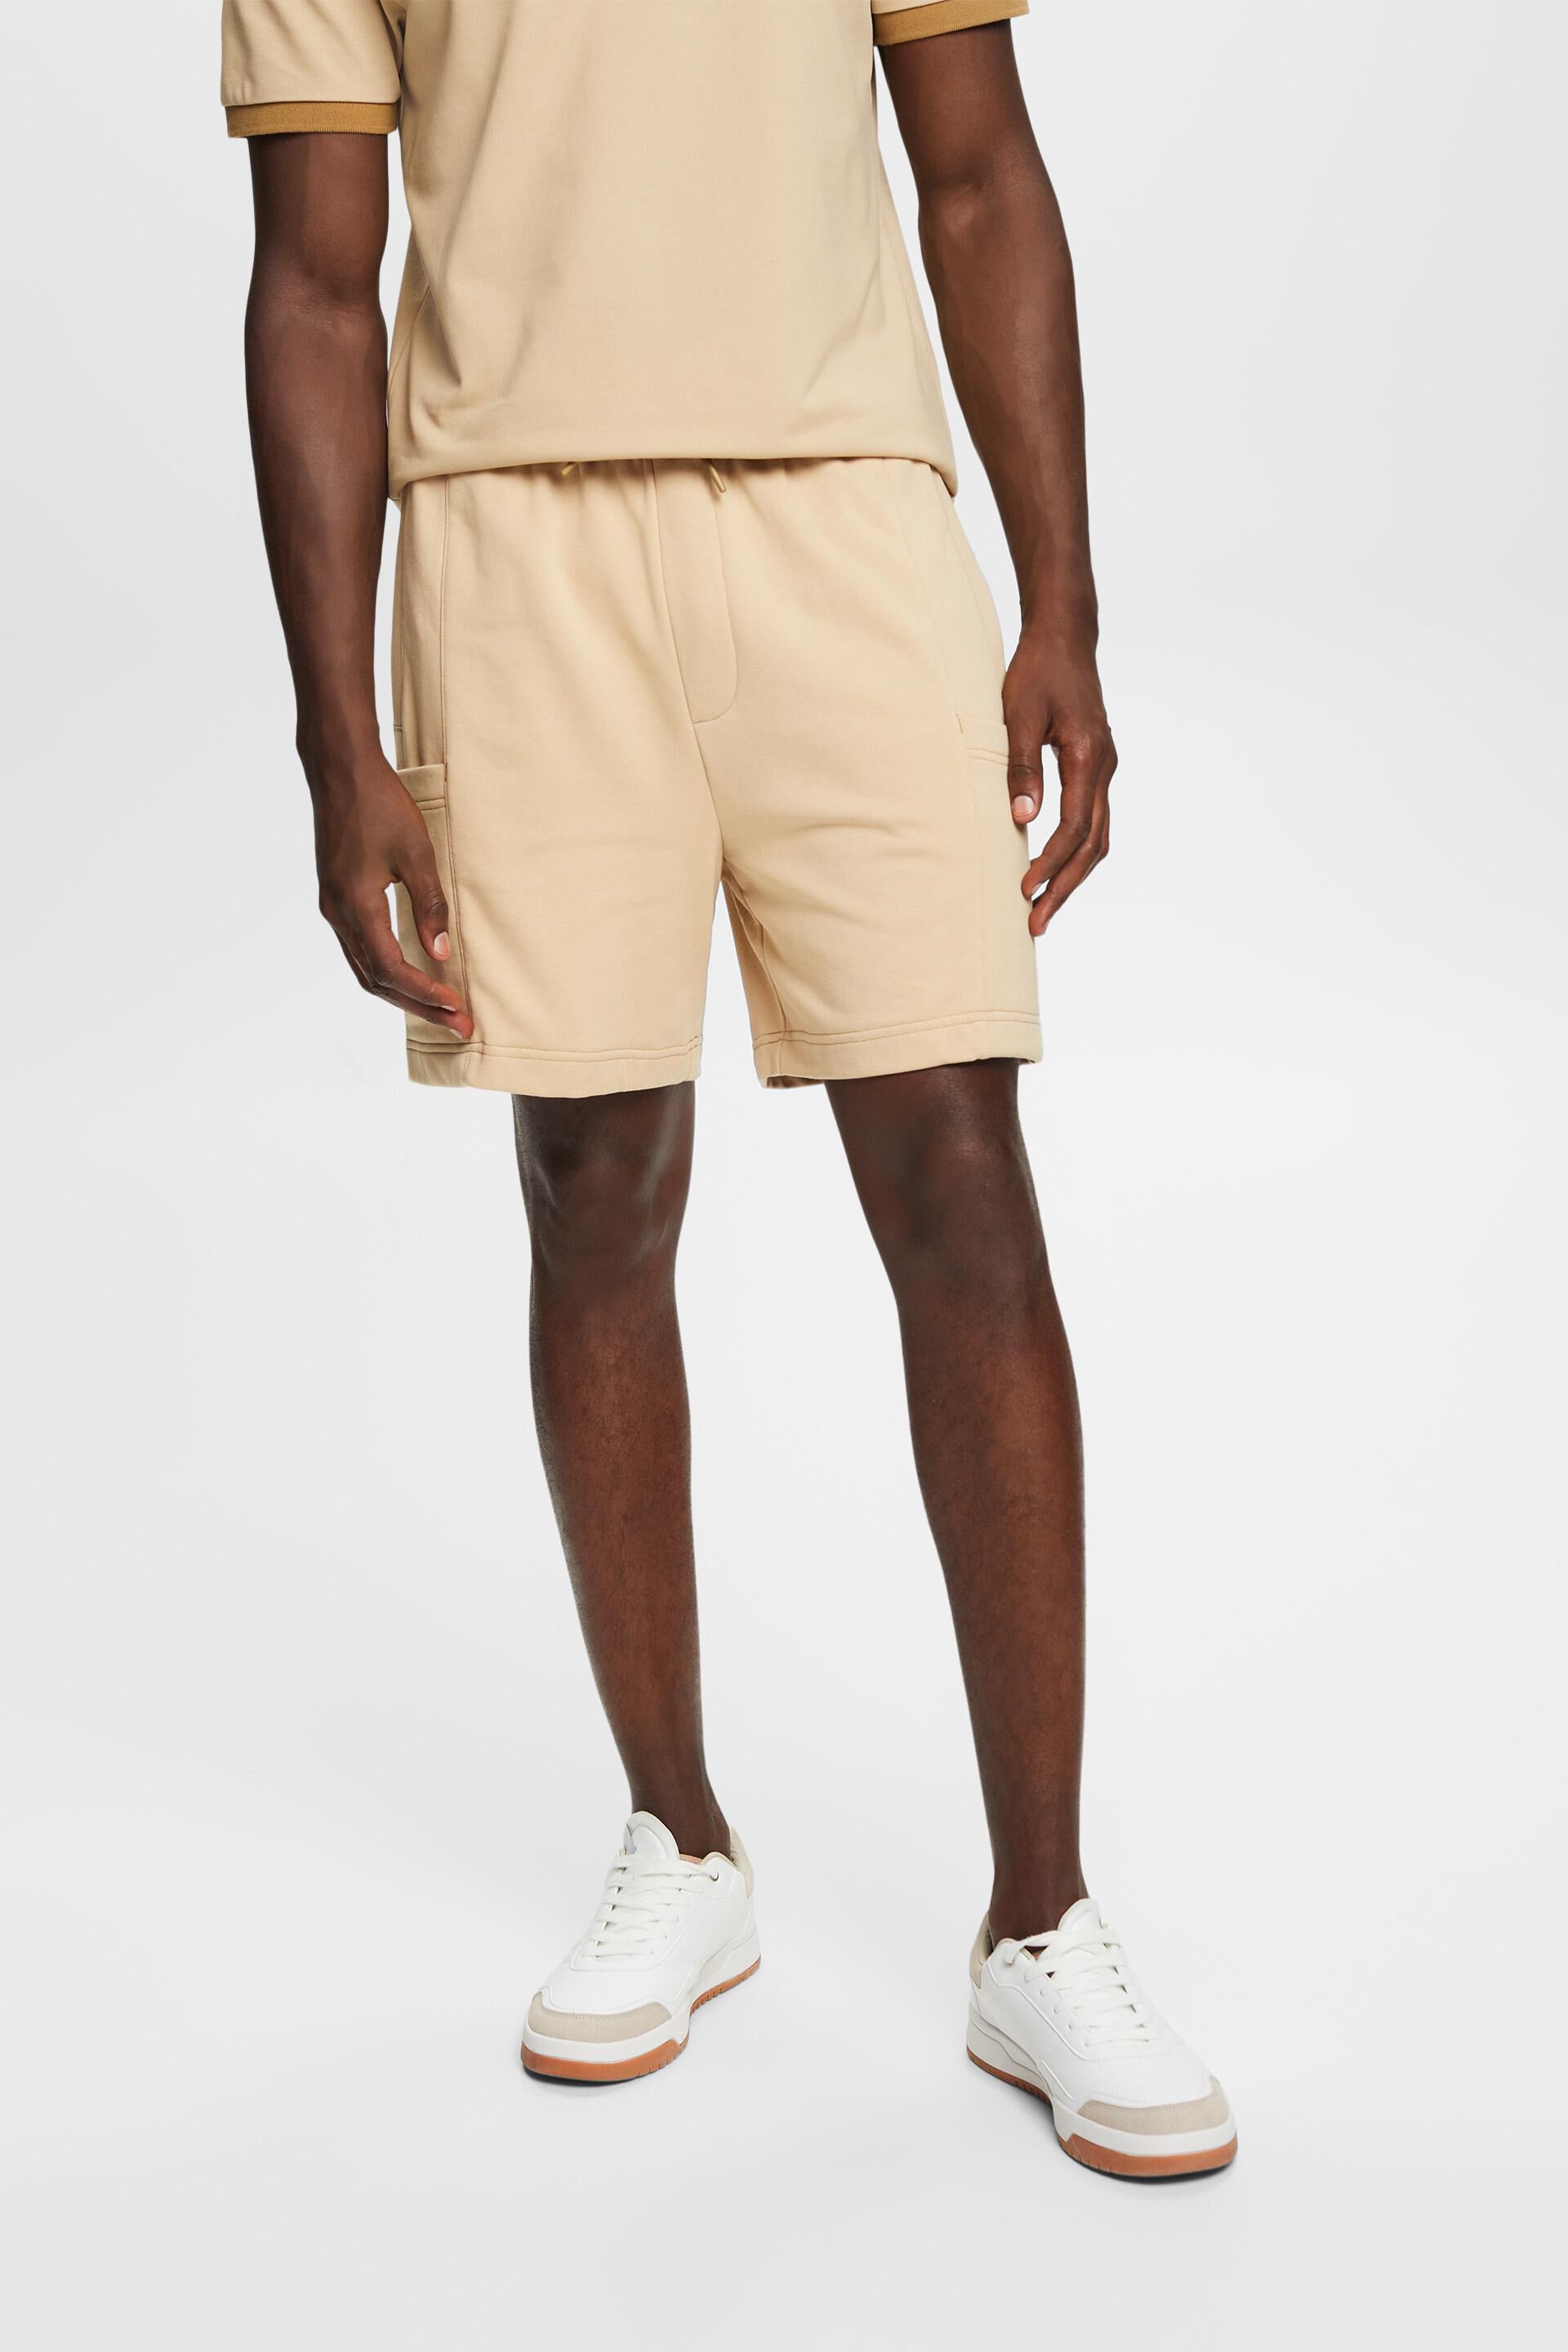 Jogger-style shorts